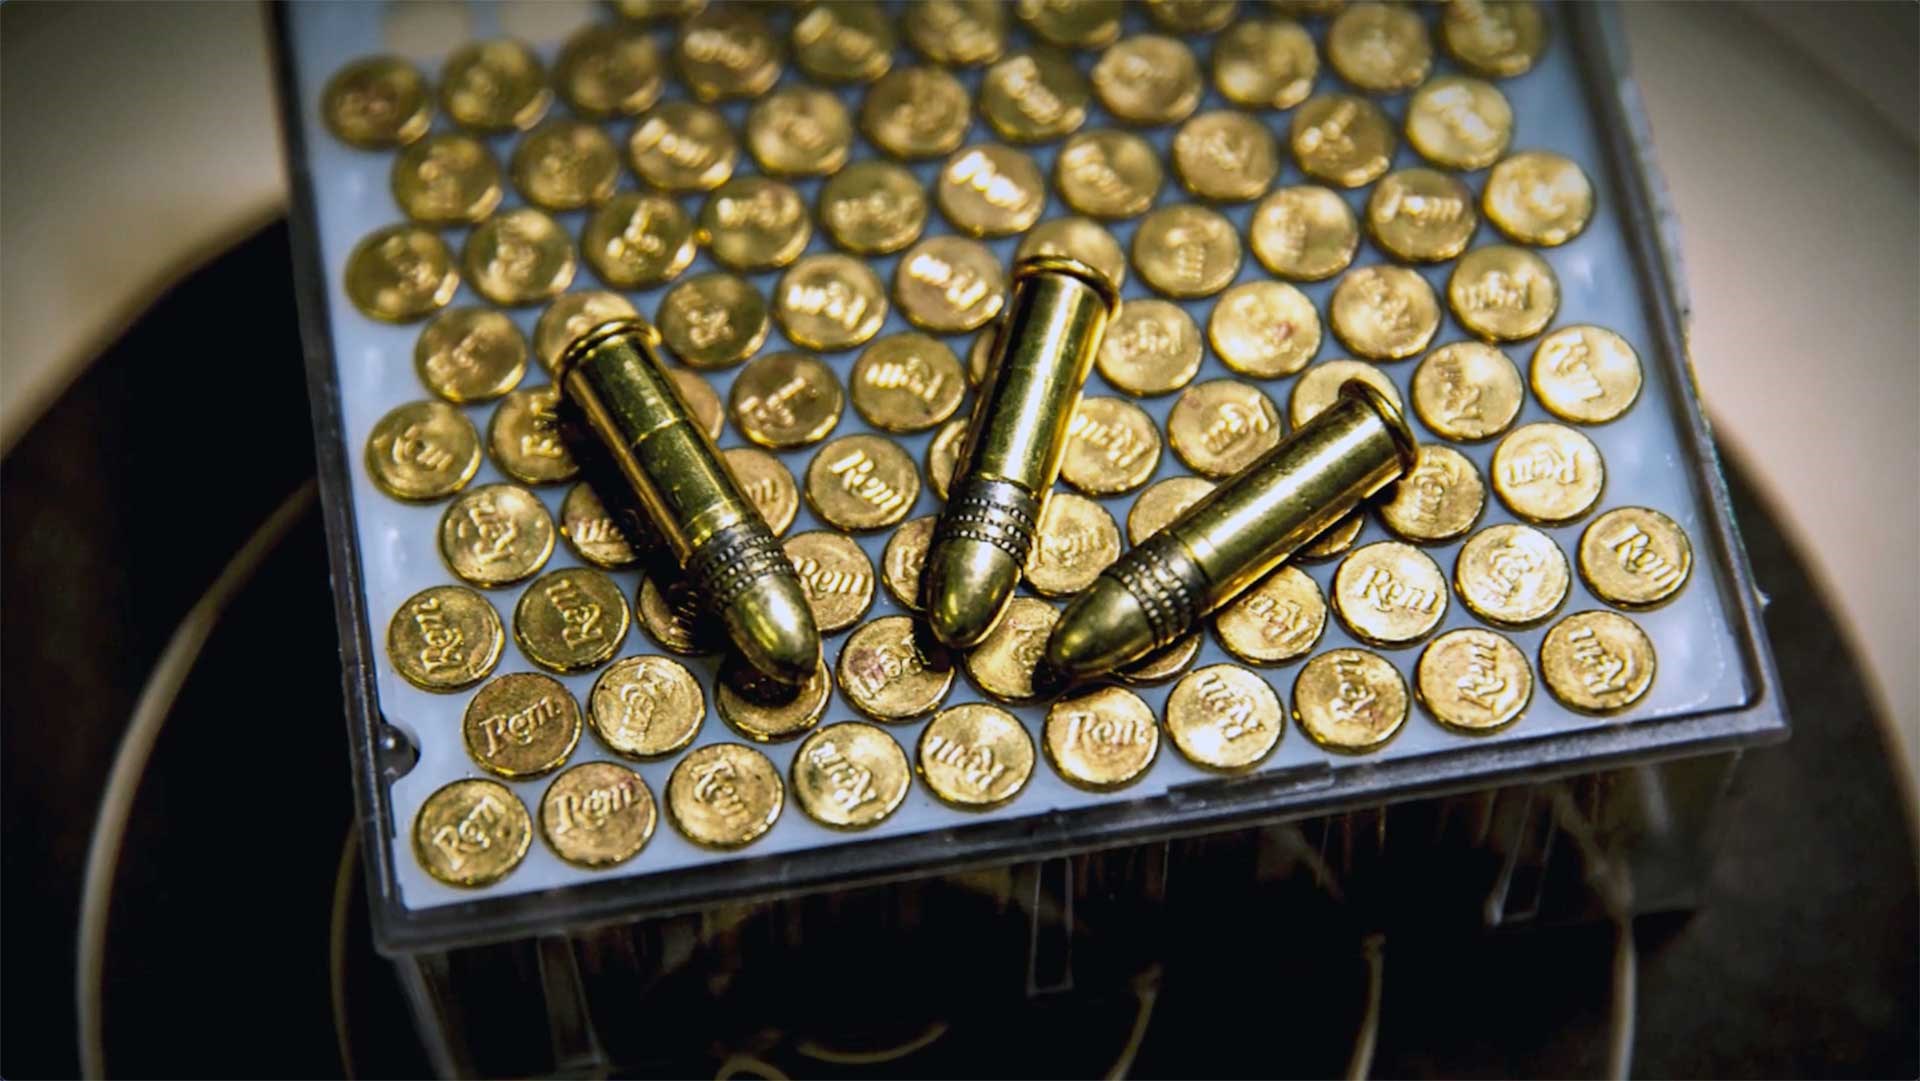 Three .22 Long Rifle cartridges sitting on top of a box of Remington .22 LR shells.